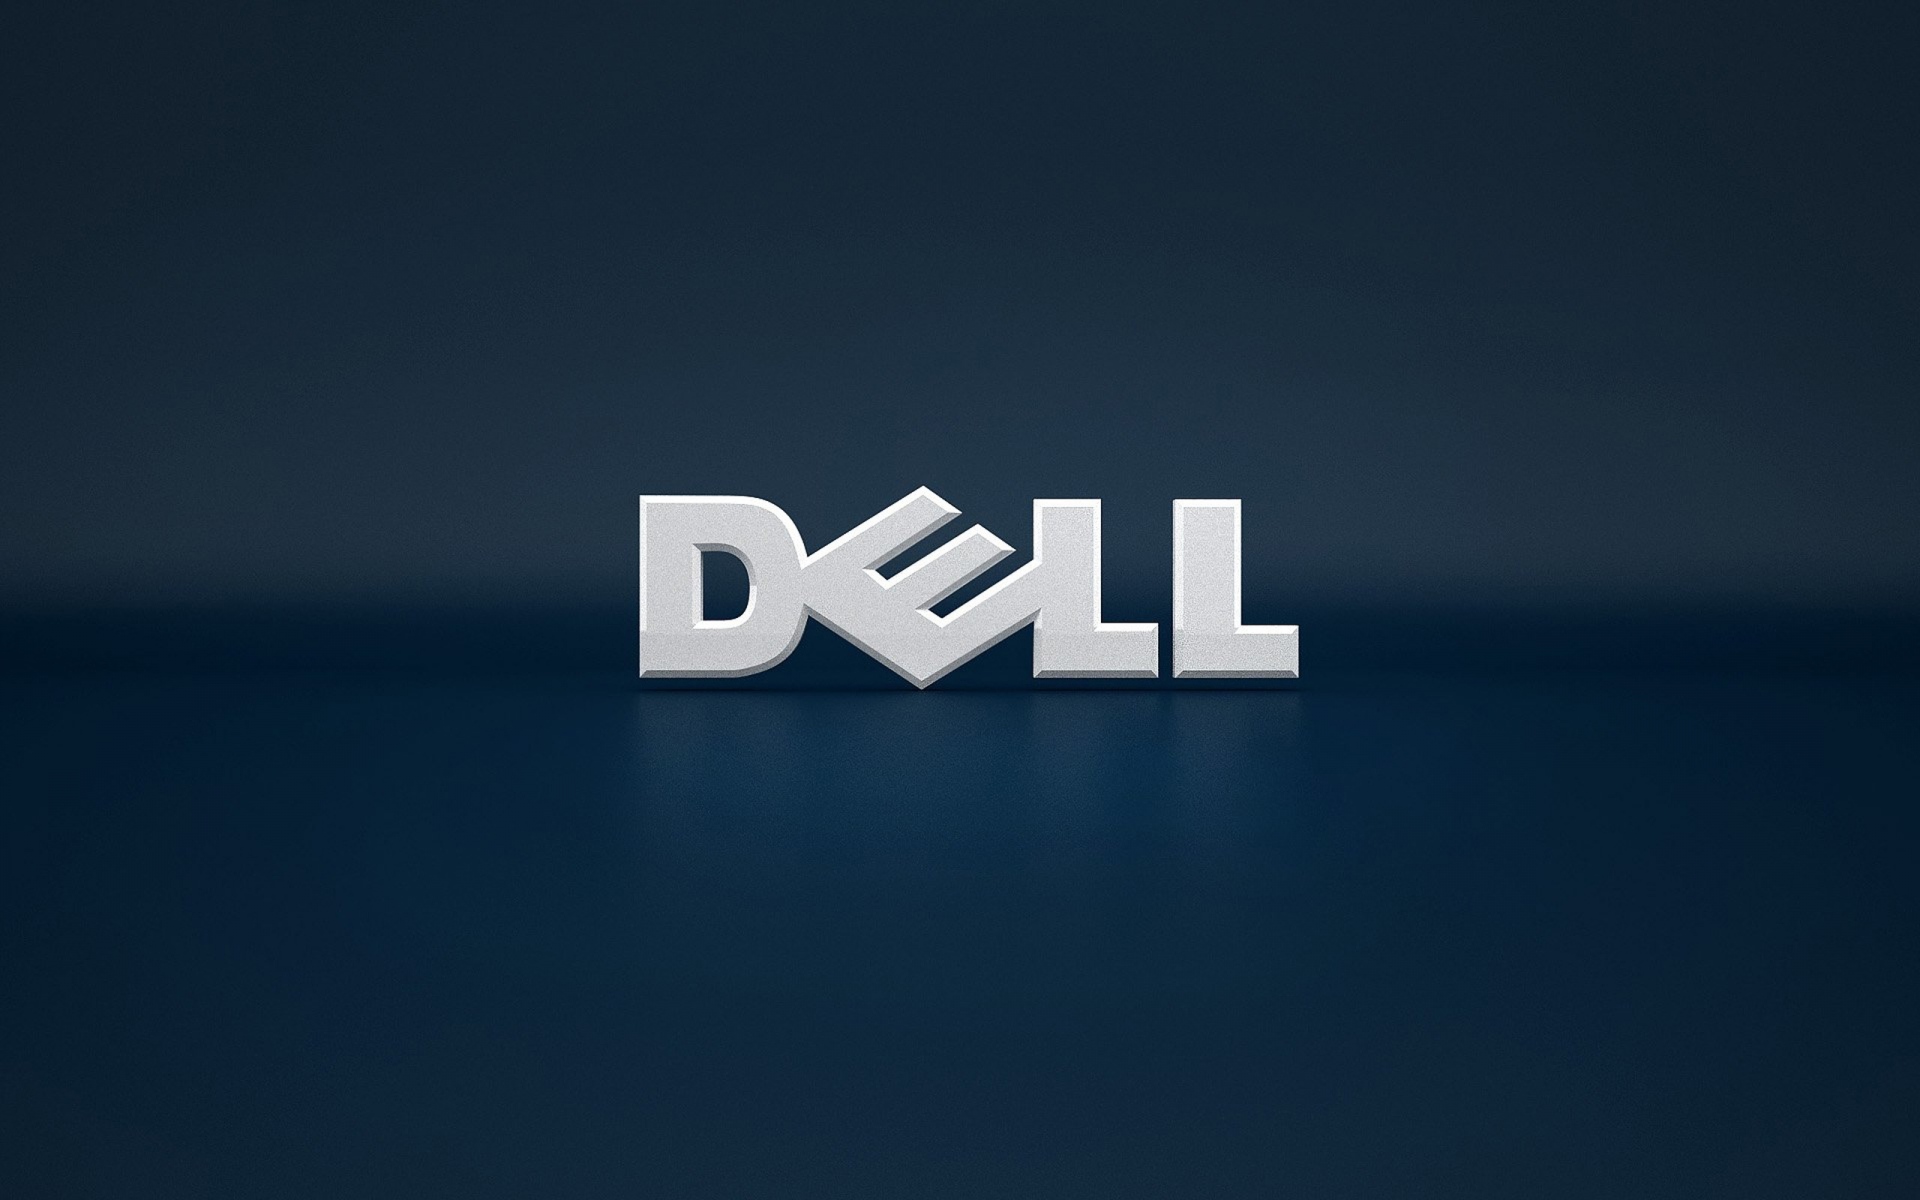 Картинки Dell, логотип, фон, компания, компьютеры фото и обои на рабочий стол